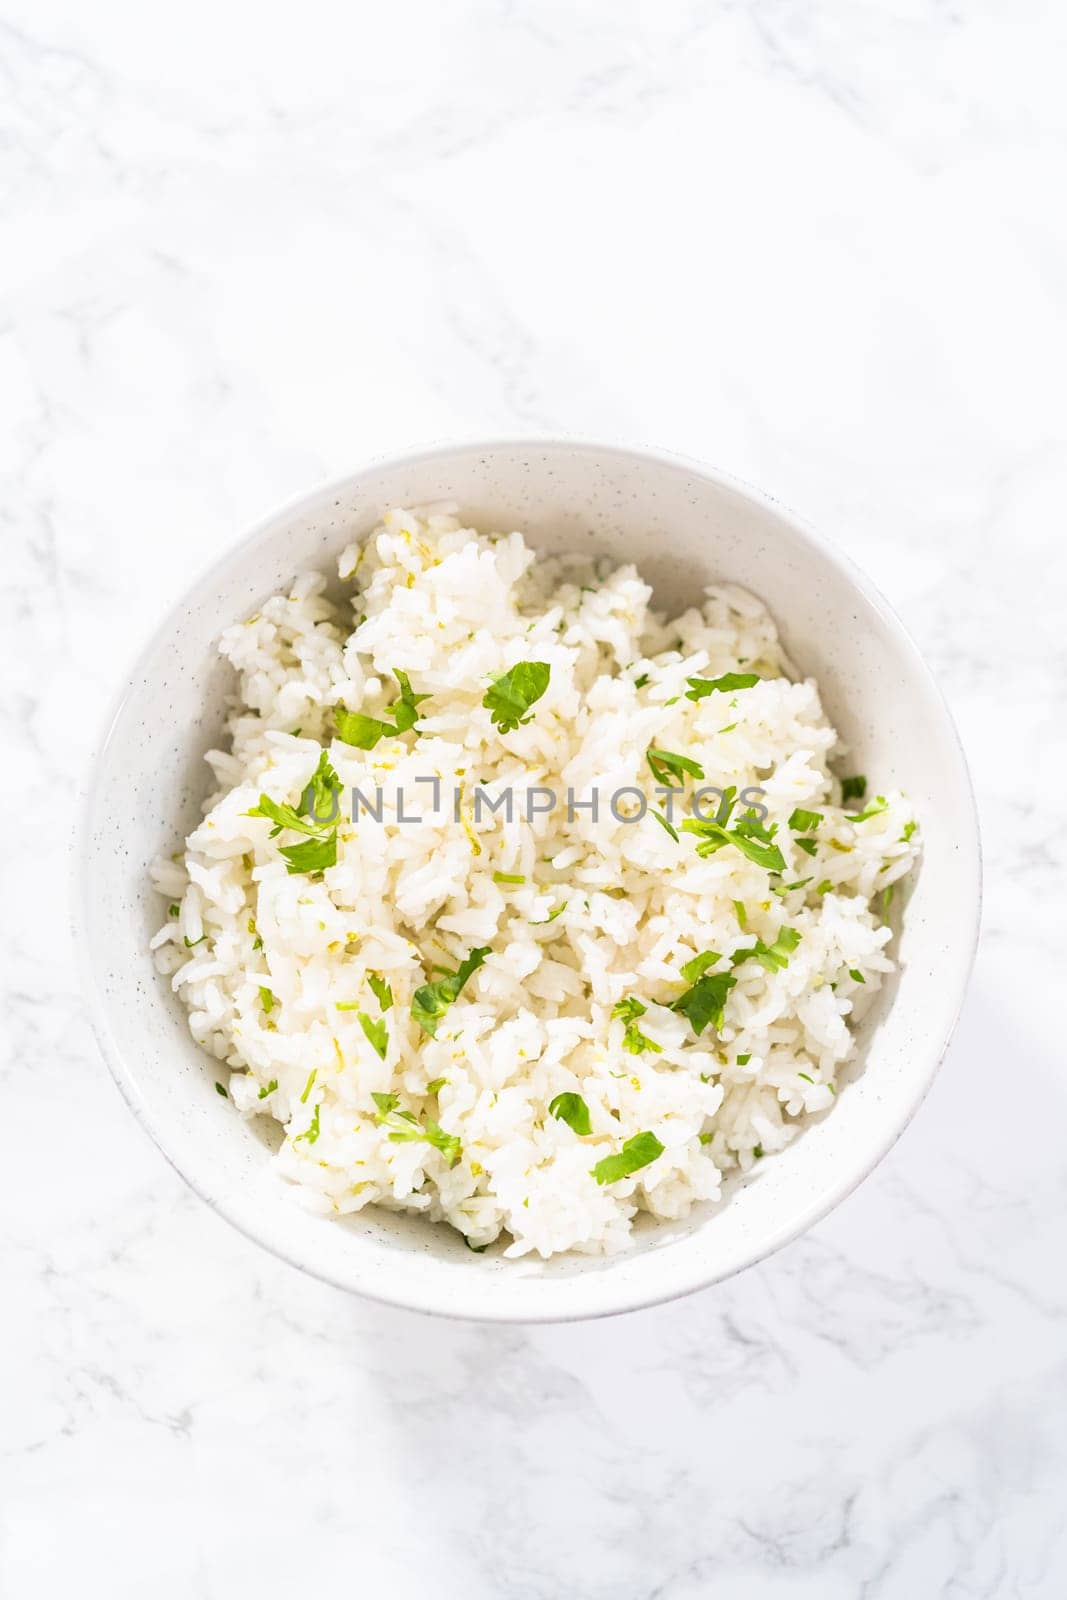 Cilantro Lime Rice by arinahabich